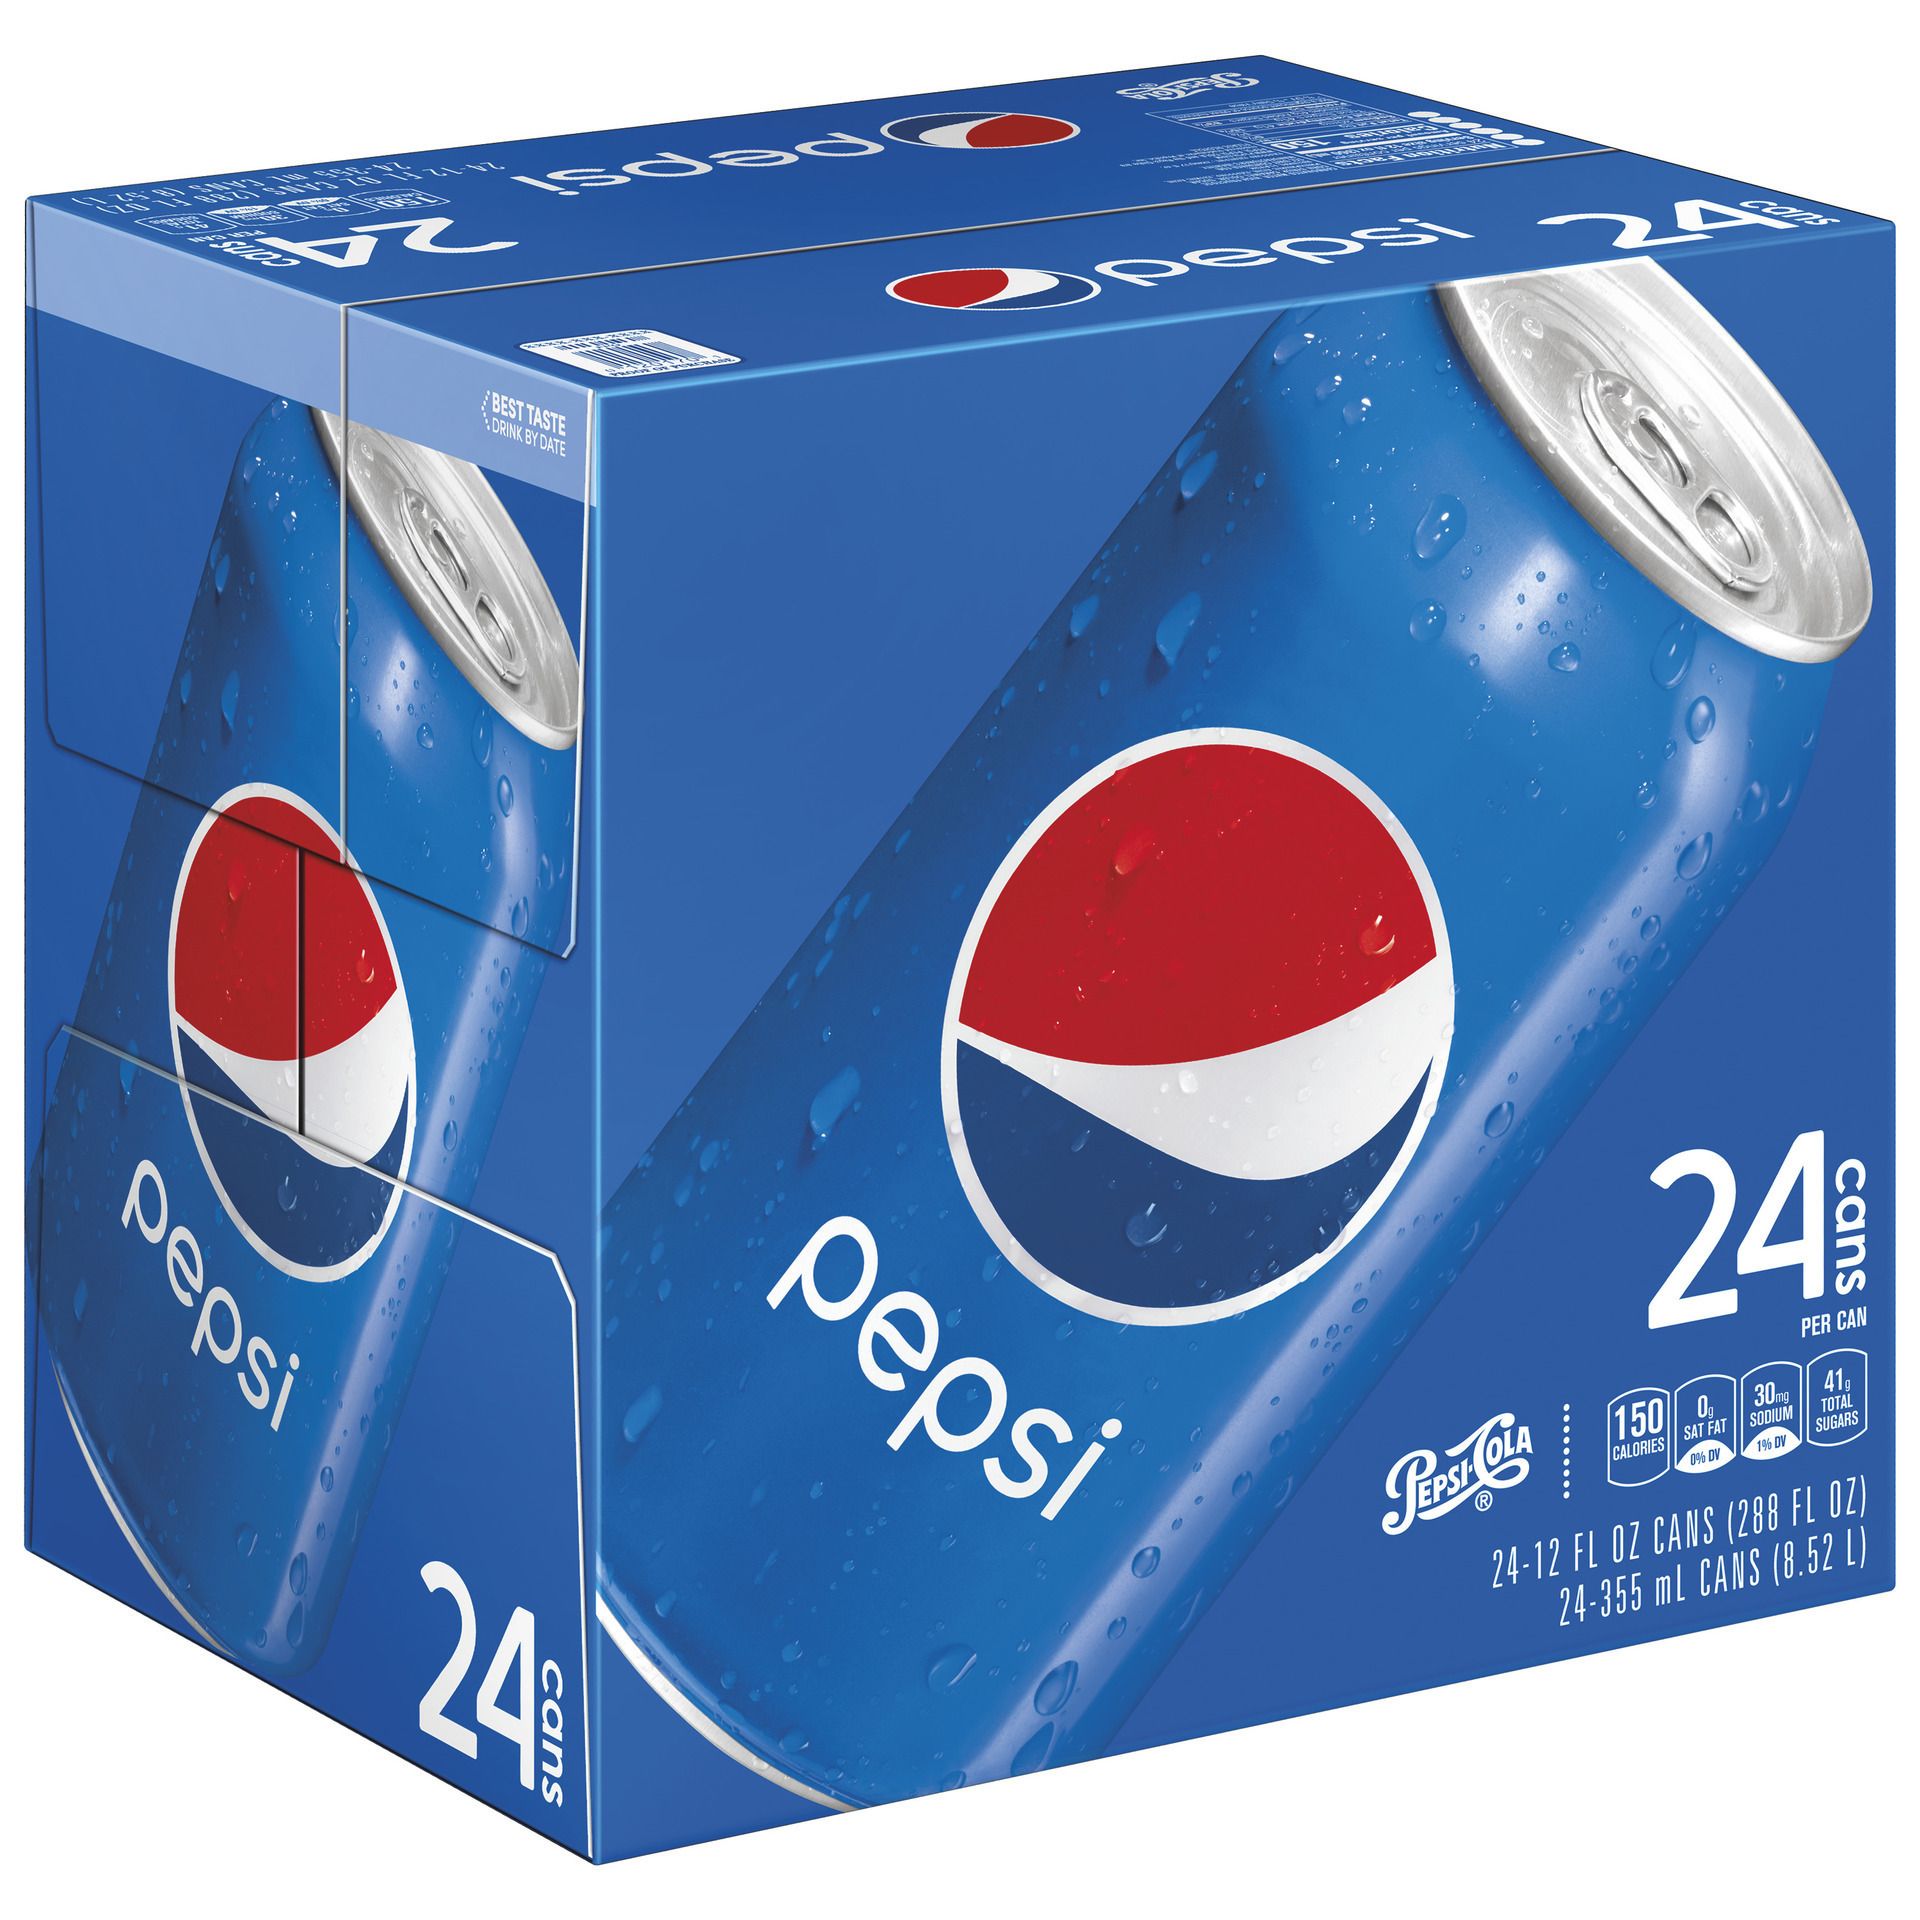 Pepsi – 20 oz Bottle 24pk Case – New York Beverage